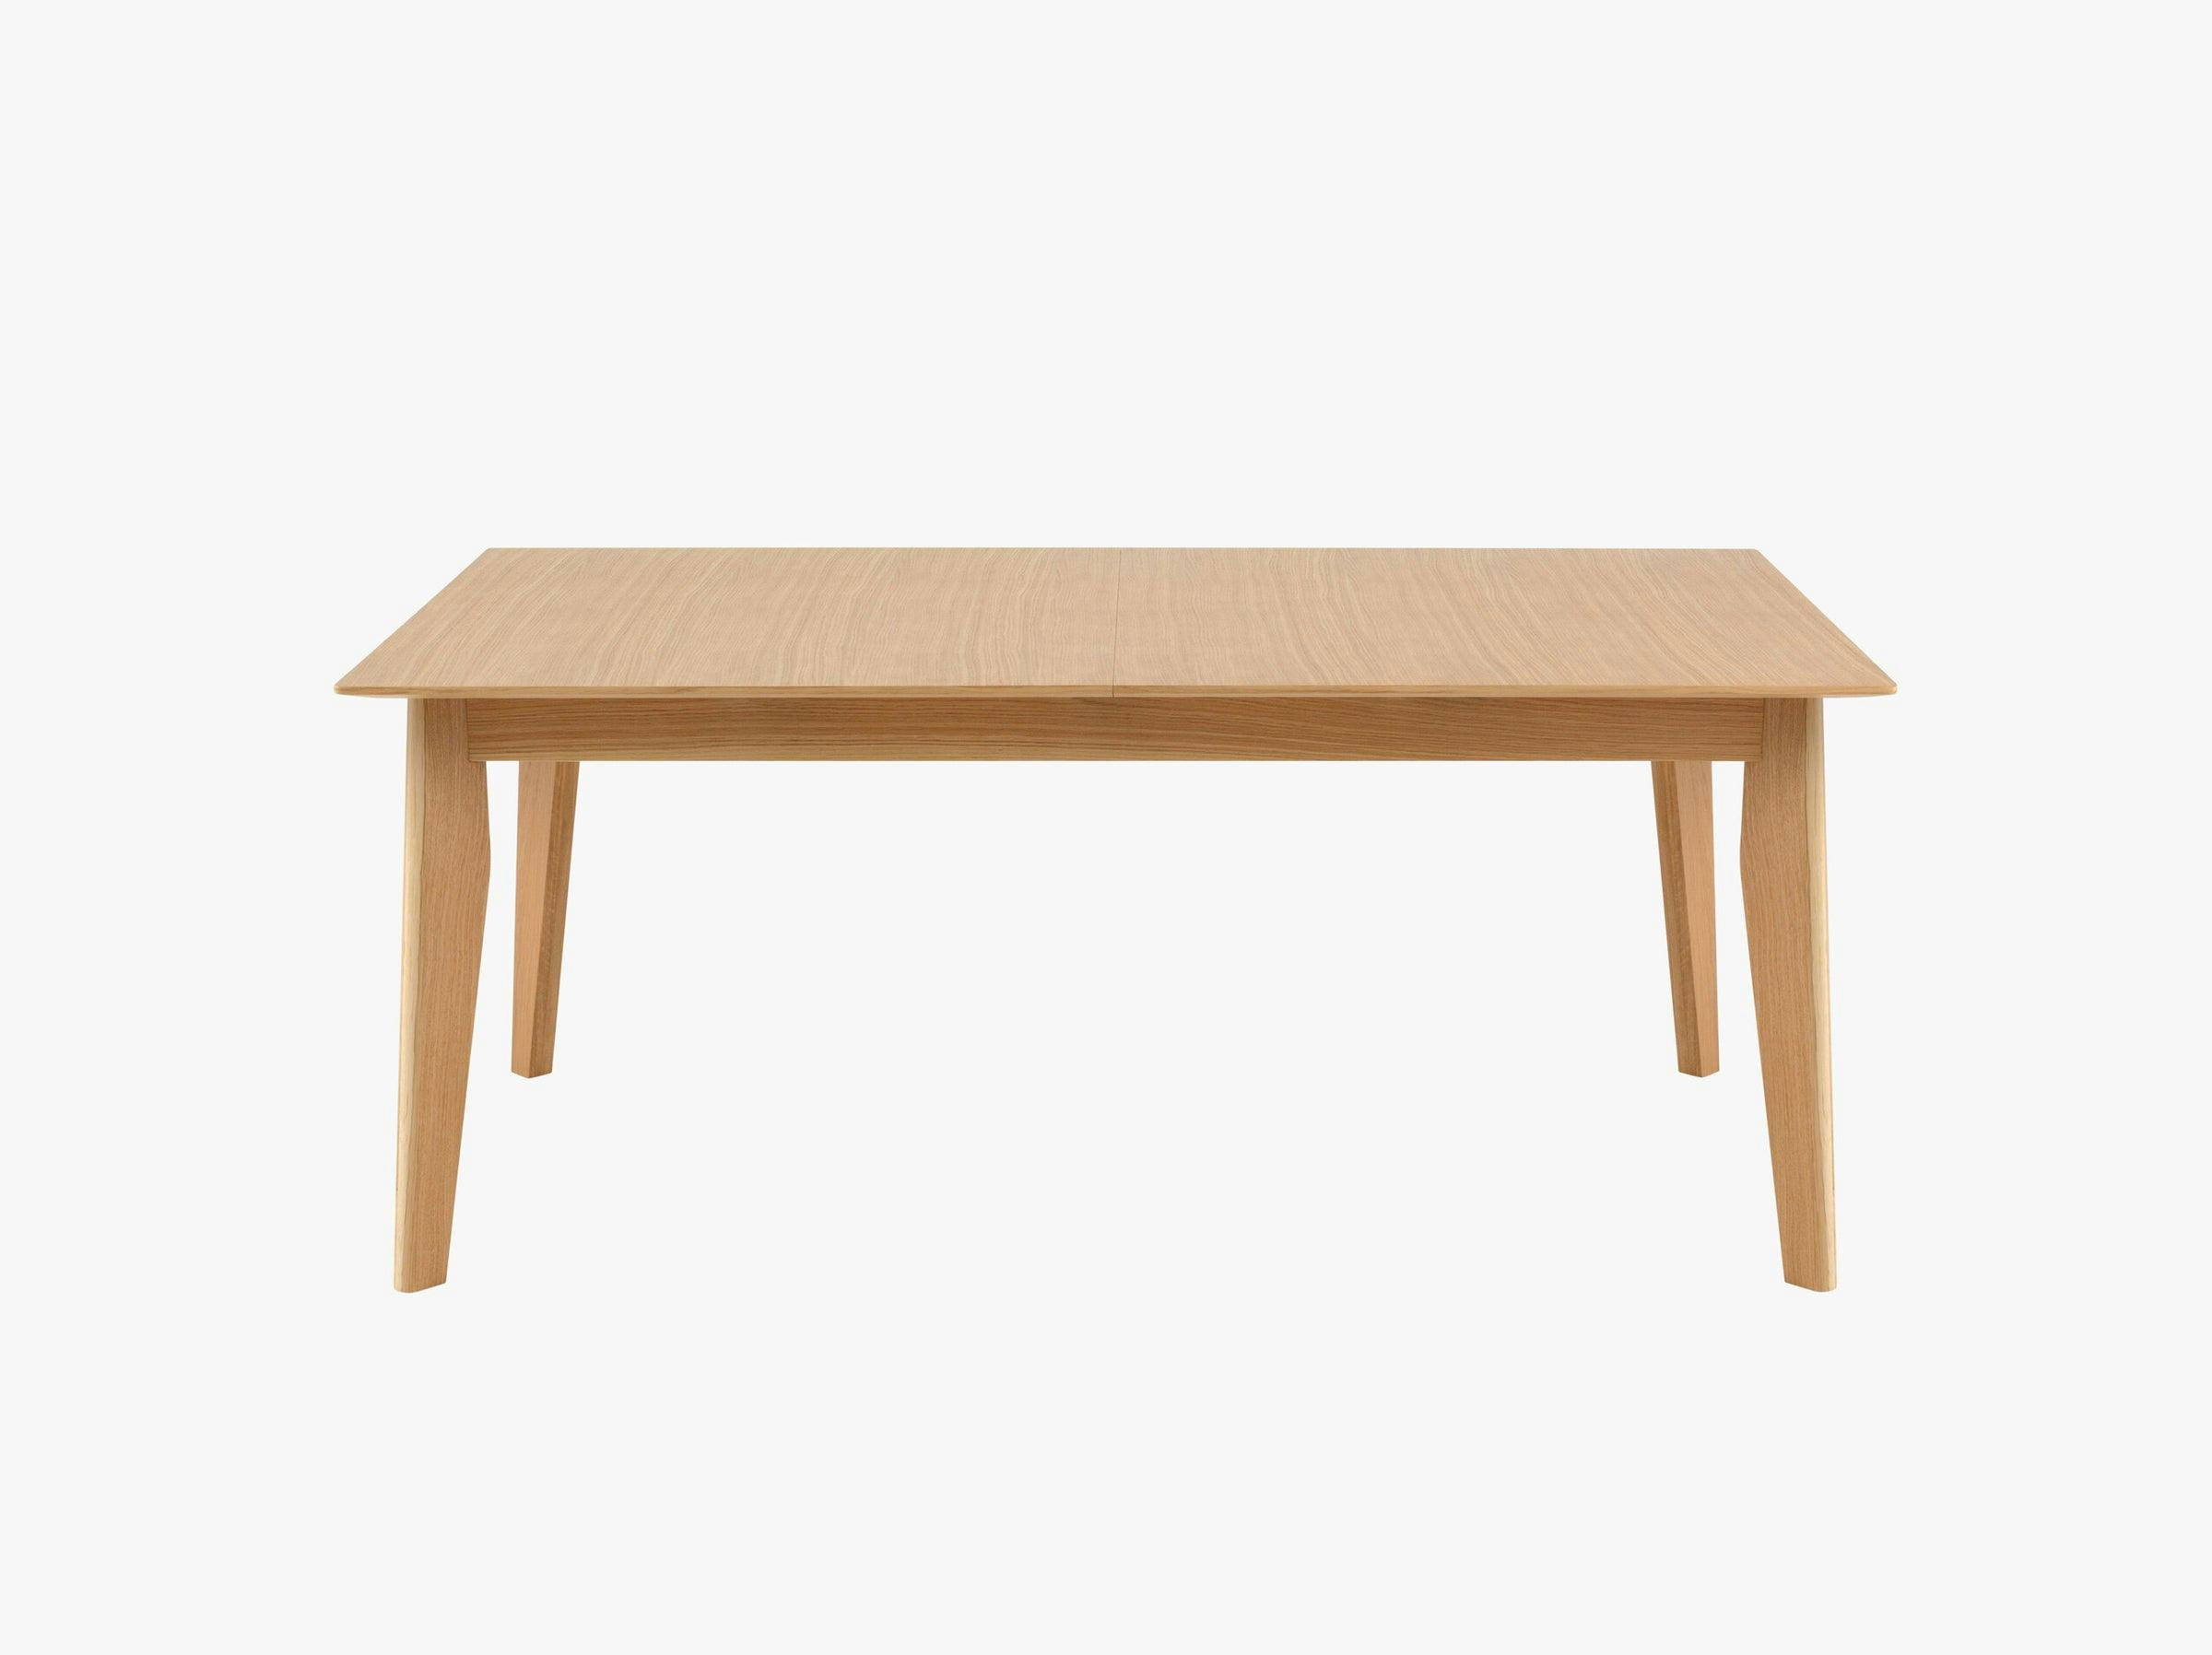 Vera tables & chairs wood natural oak veneer and oak